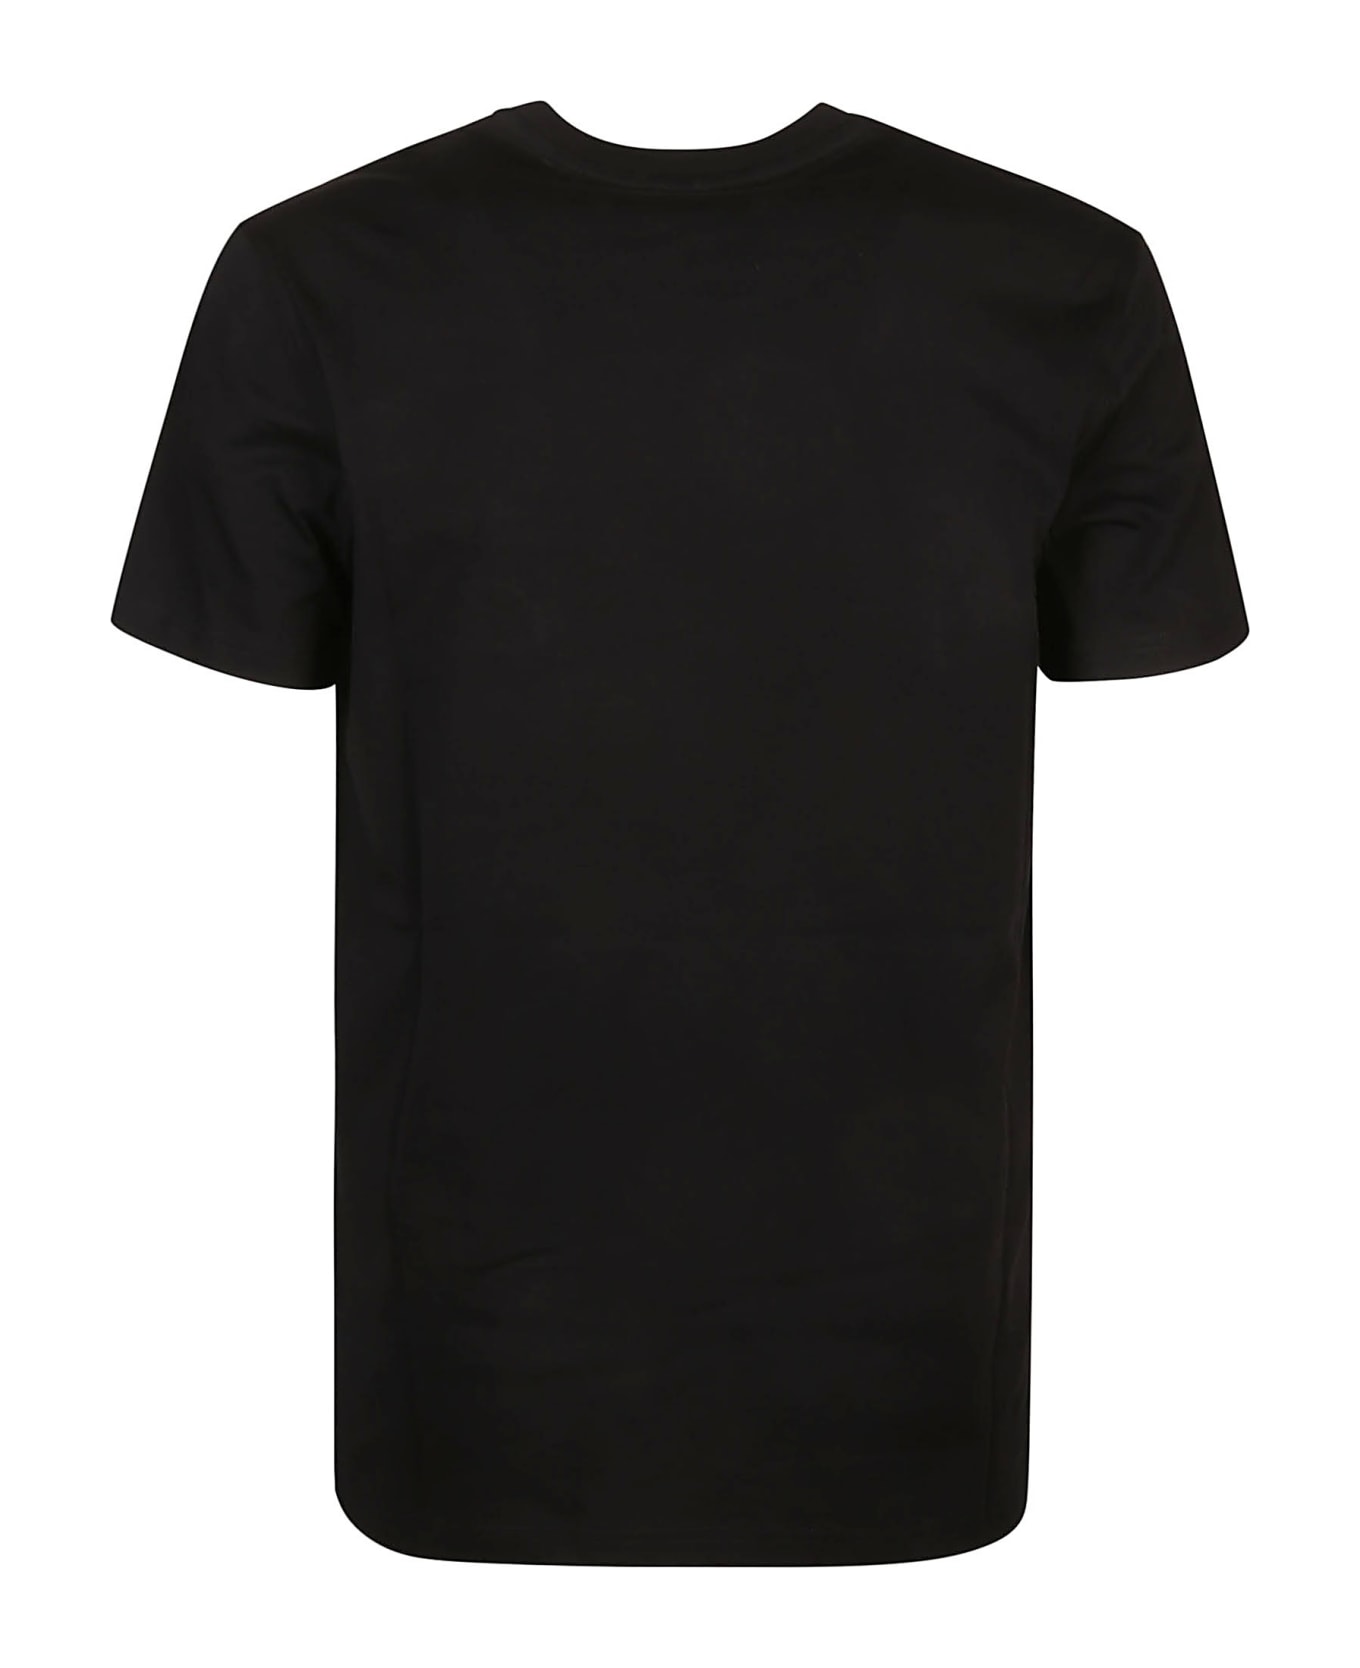 Moschino T-shirt - Nero Fantasia シャツ